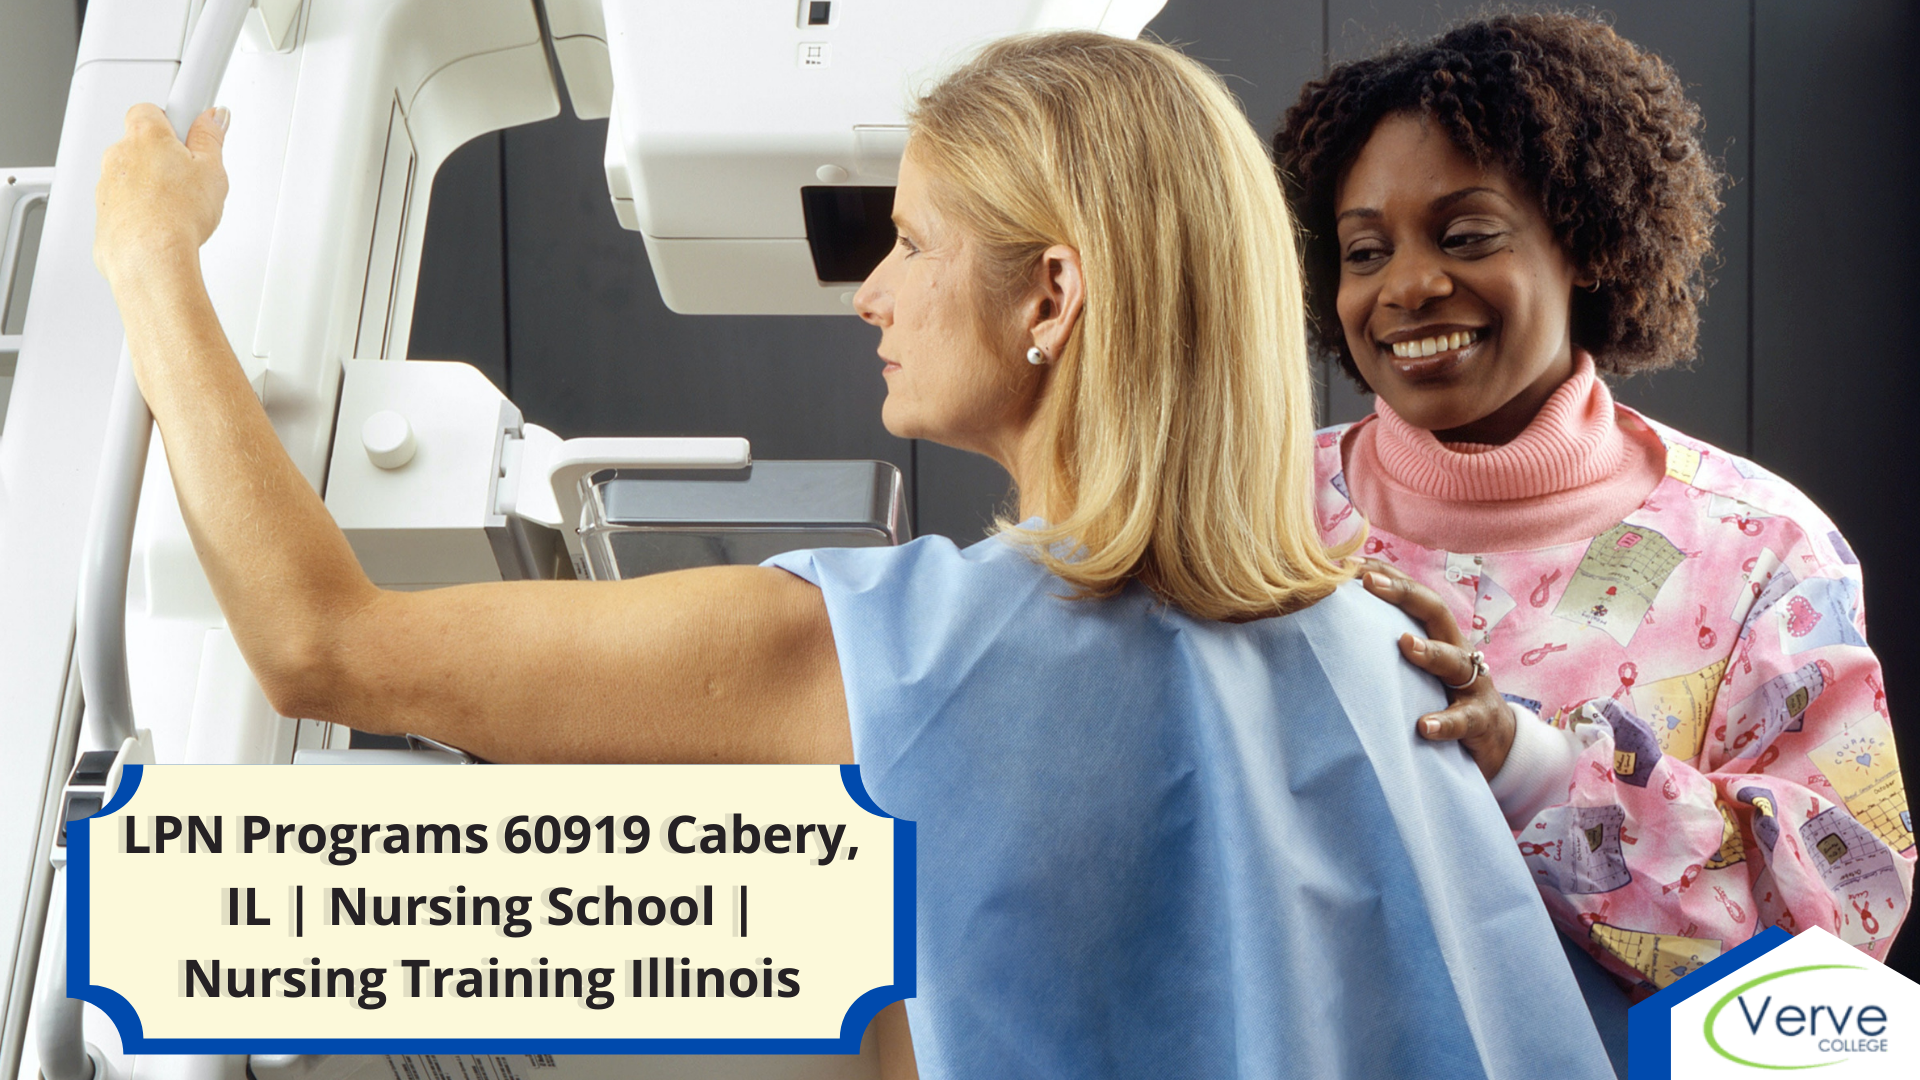 LPN Programs 60919 Cabery, IL | Nursing School | Nursing Training Illinois